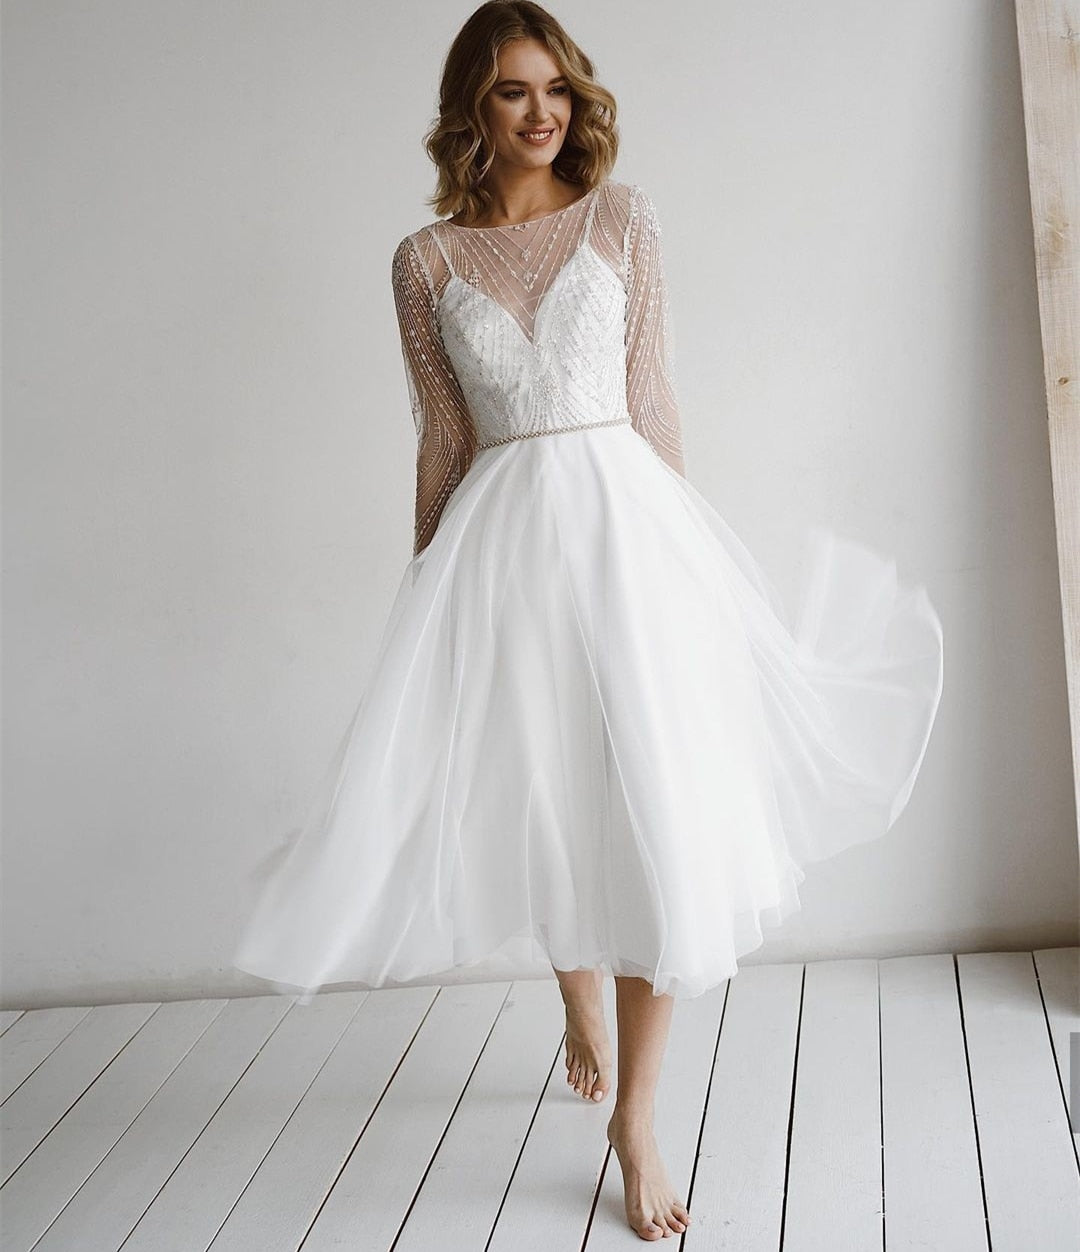 Beading Sashes Tassel Bridal Short Wedding Dress| All For Me Today